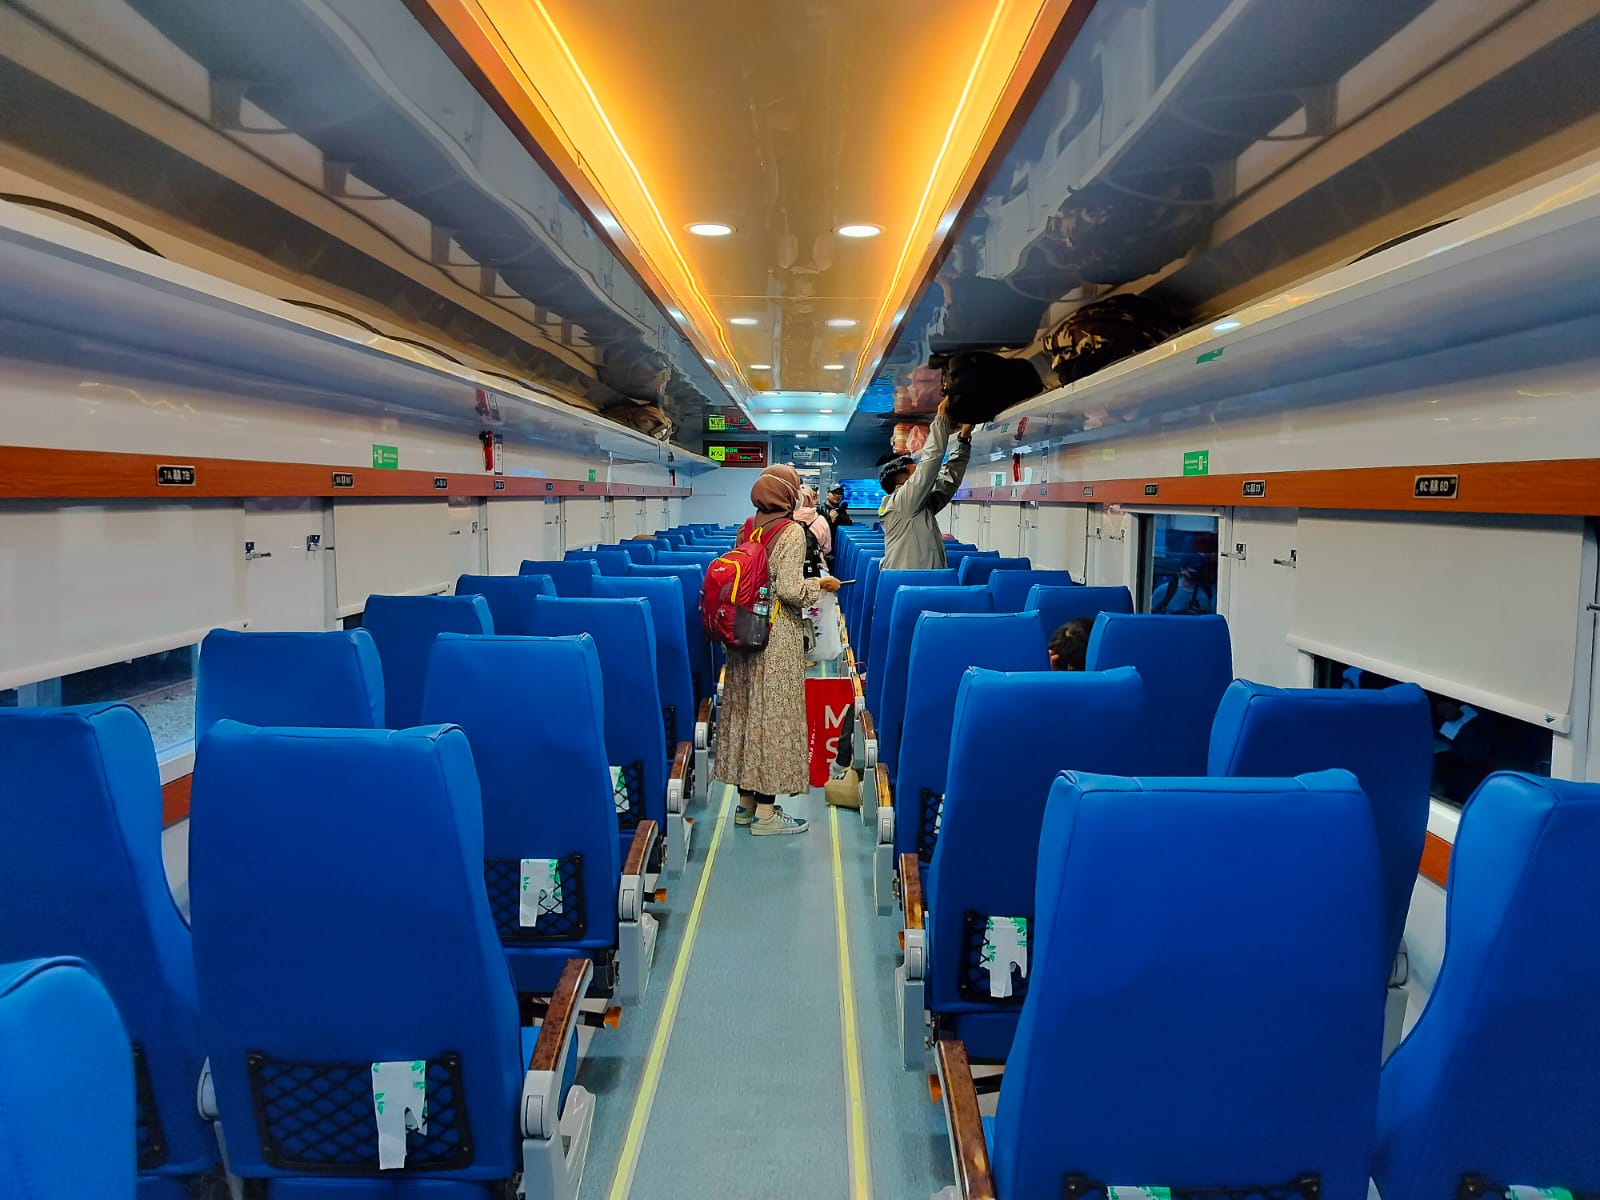 Suasana kabin kereta api (Sinpo.id/KAI)